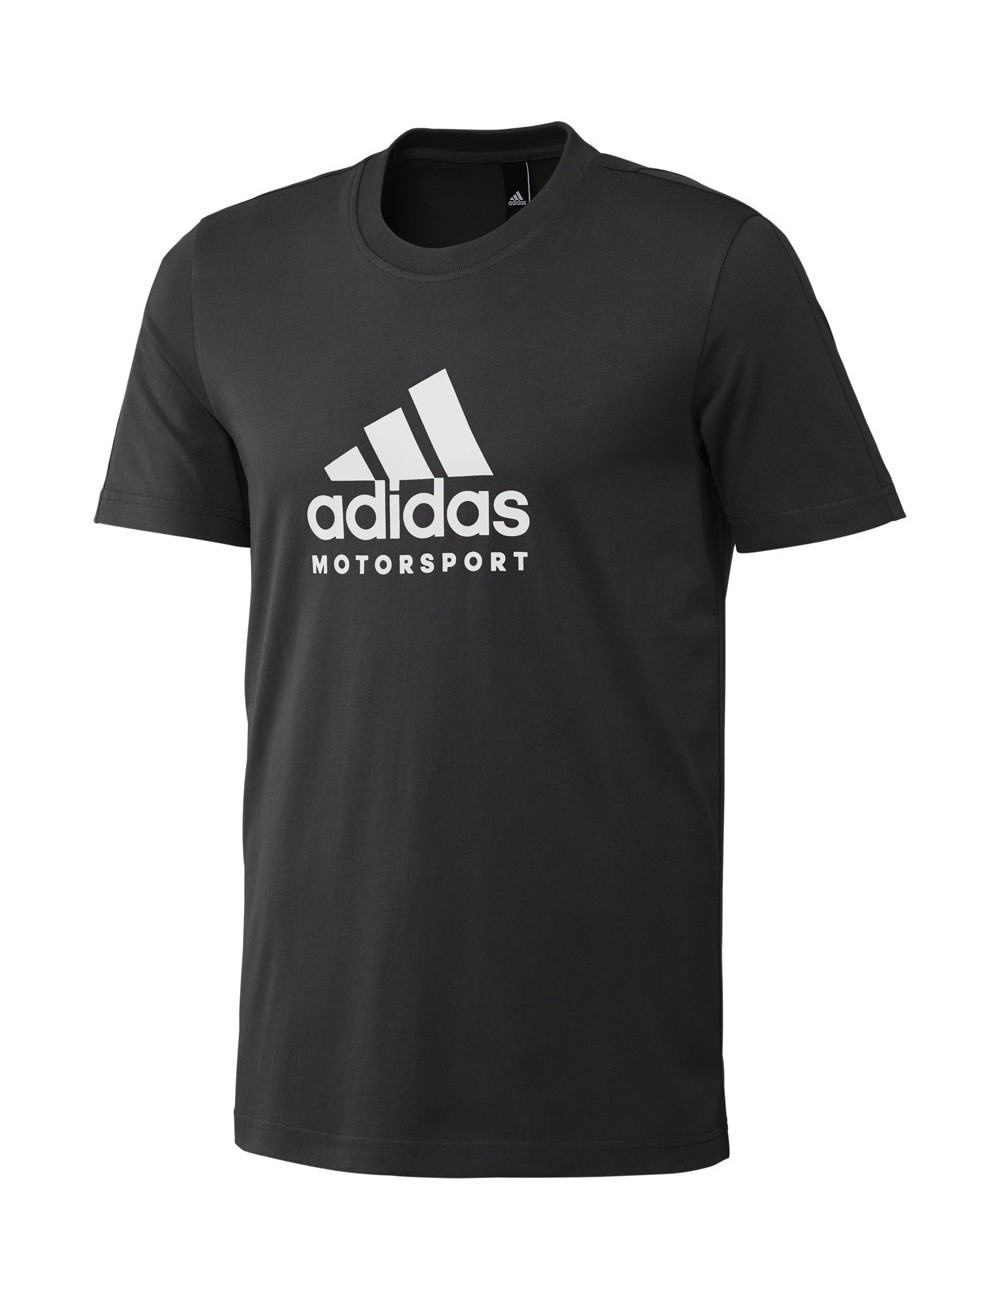 Adidas Tee-shirt Motorsport  blanc/noir